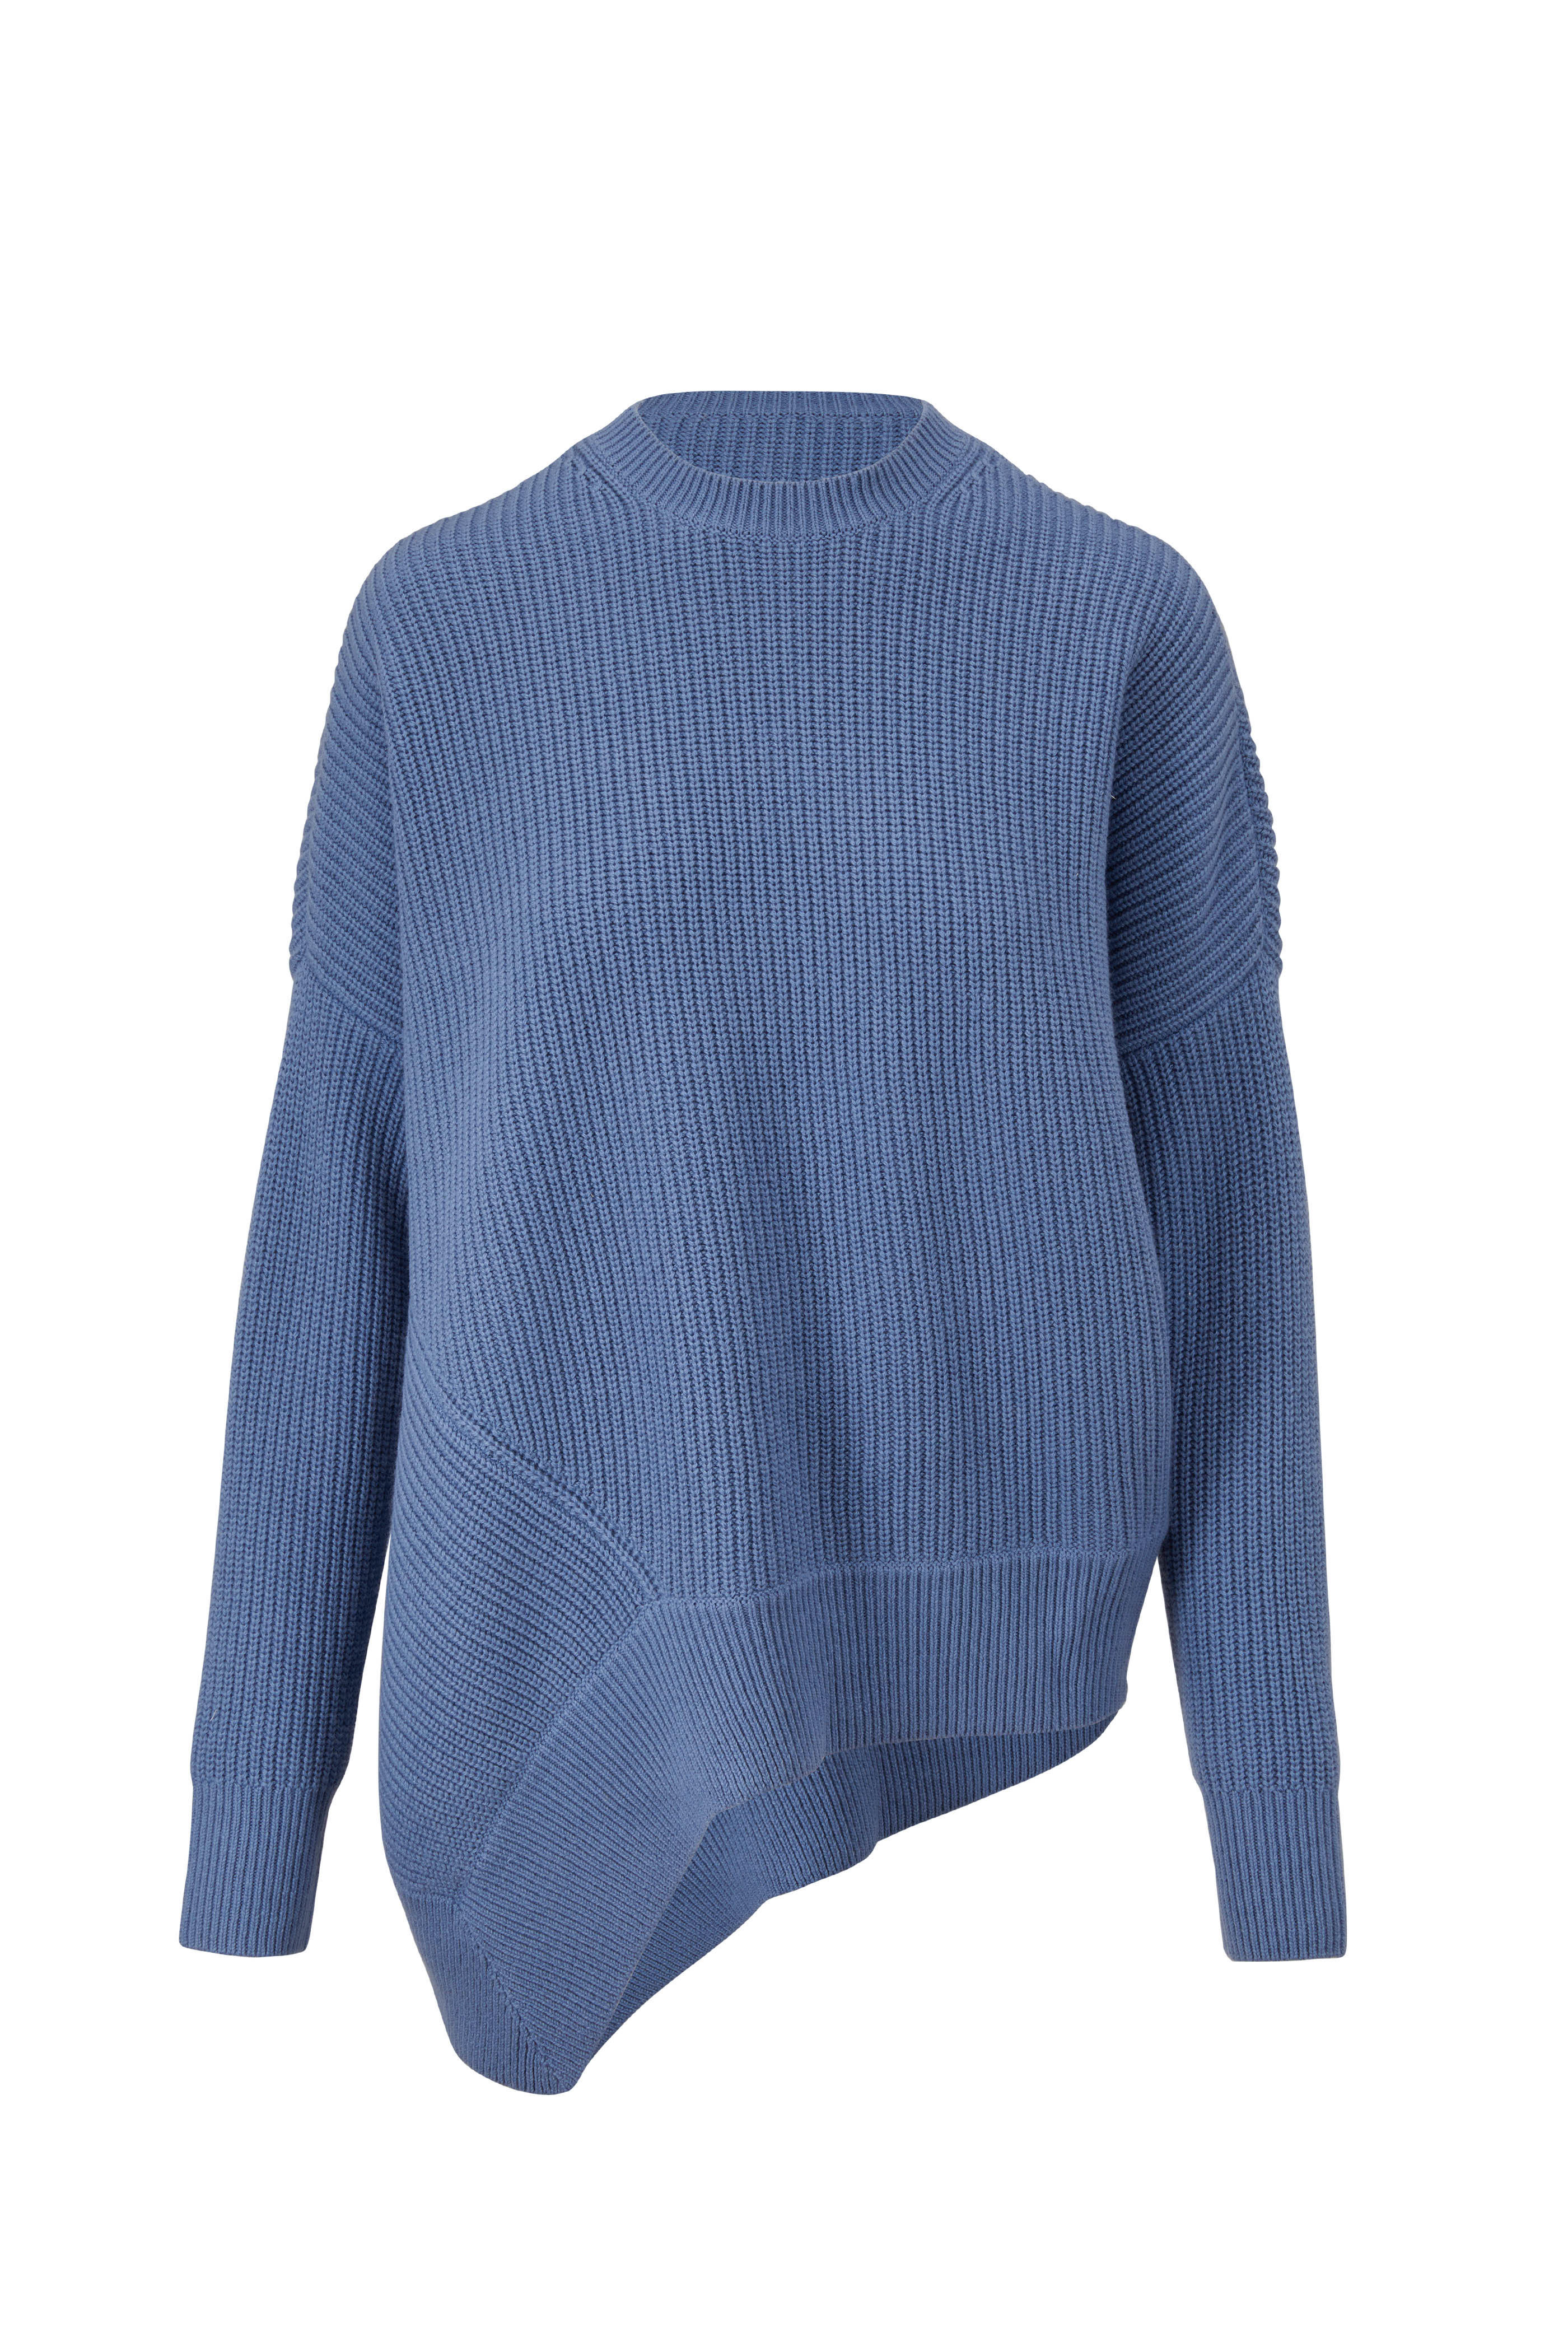 michael kors crewneck sweater